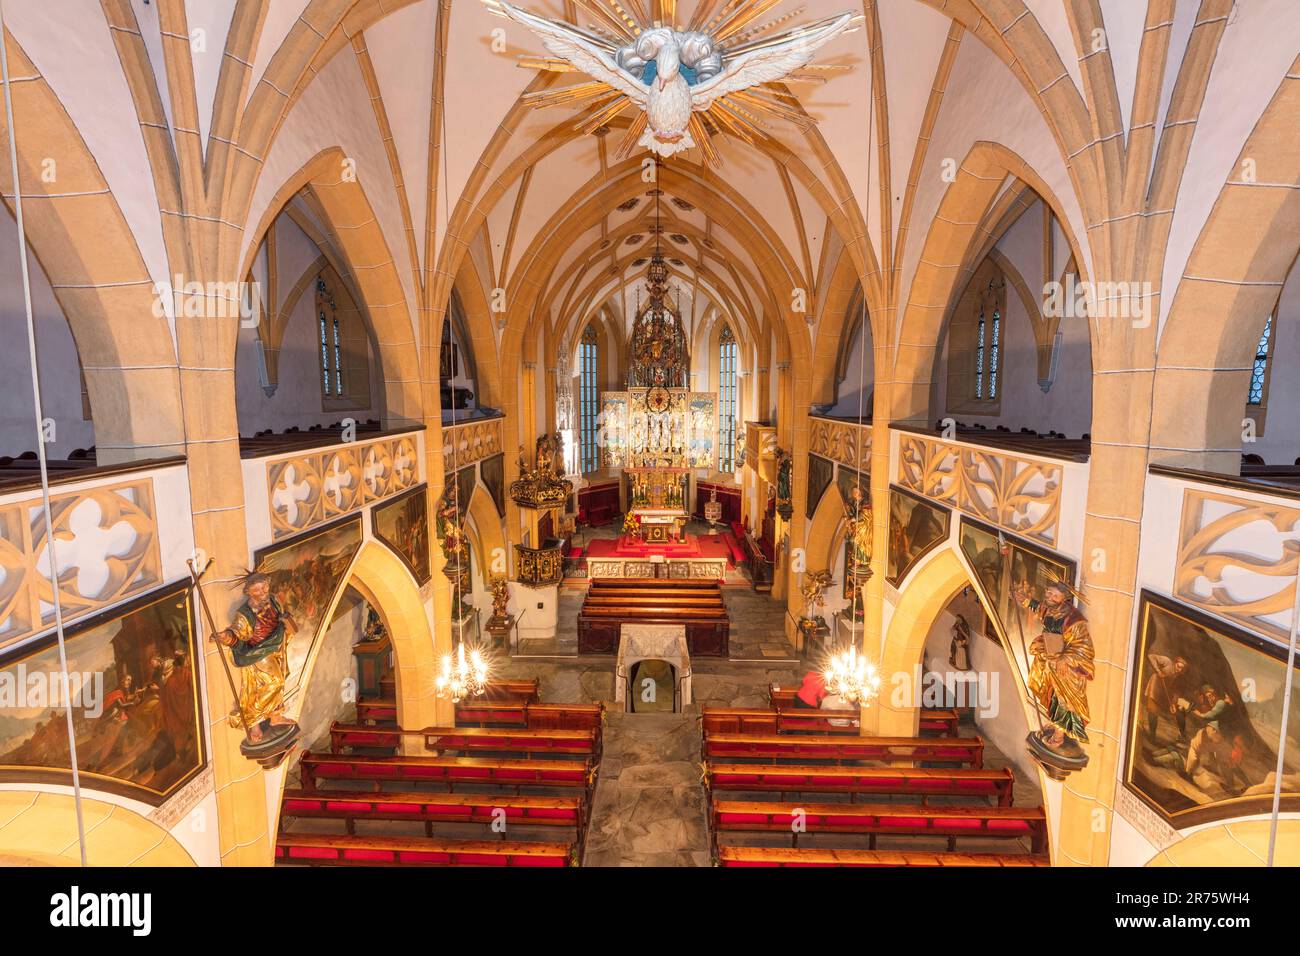 Iglesia parroquial St Vincent, interior, Heiligenblut am Großglockner, vista de galería a altar, entrada a cripta, festivamente decorado, araña, cosecha de acción de gracias Foto de stock